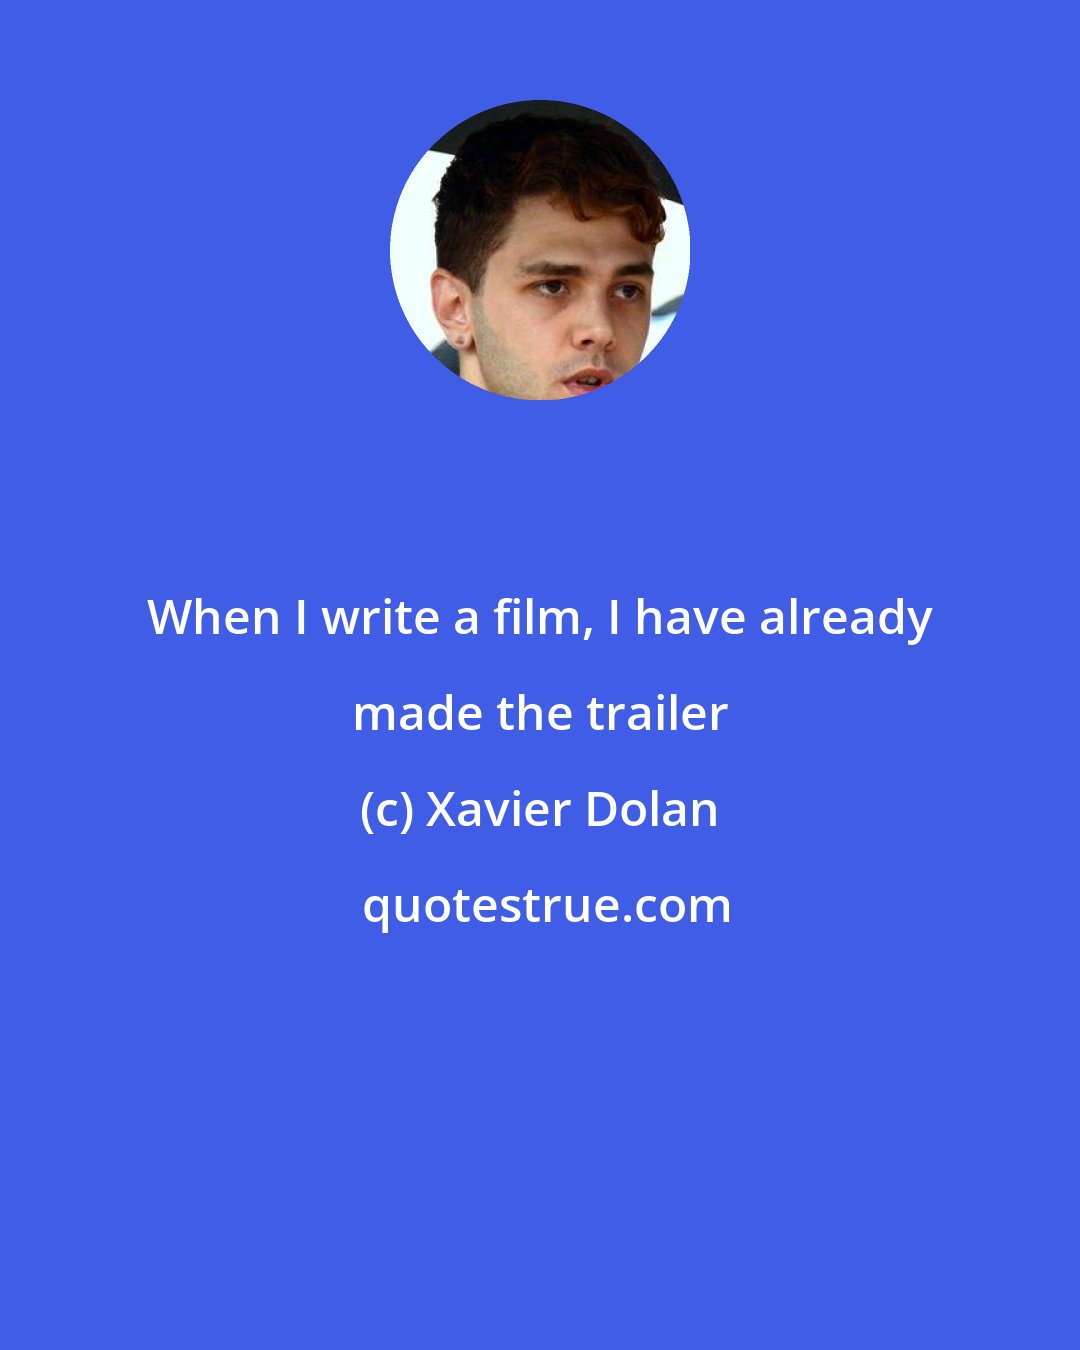 Xavier Dolan: When I write a film, I have already made the trailer